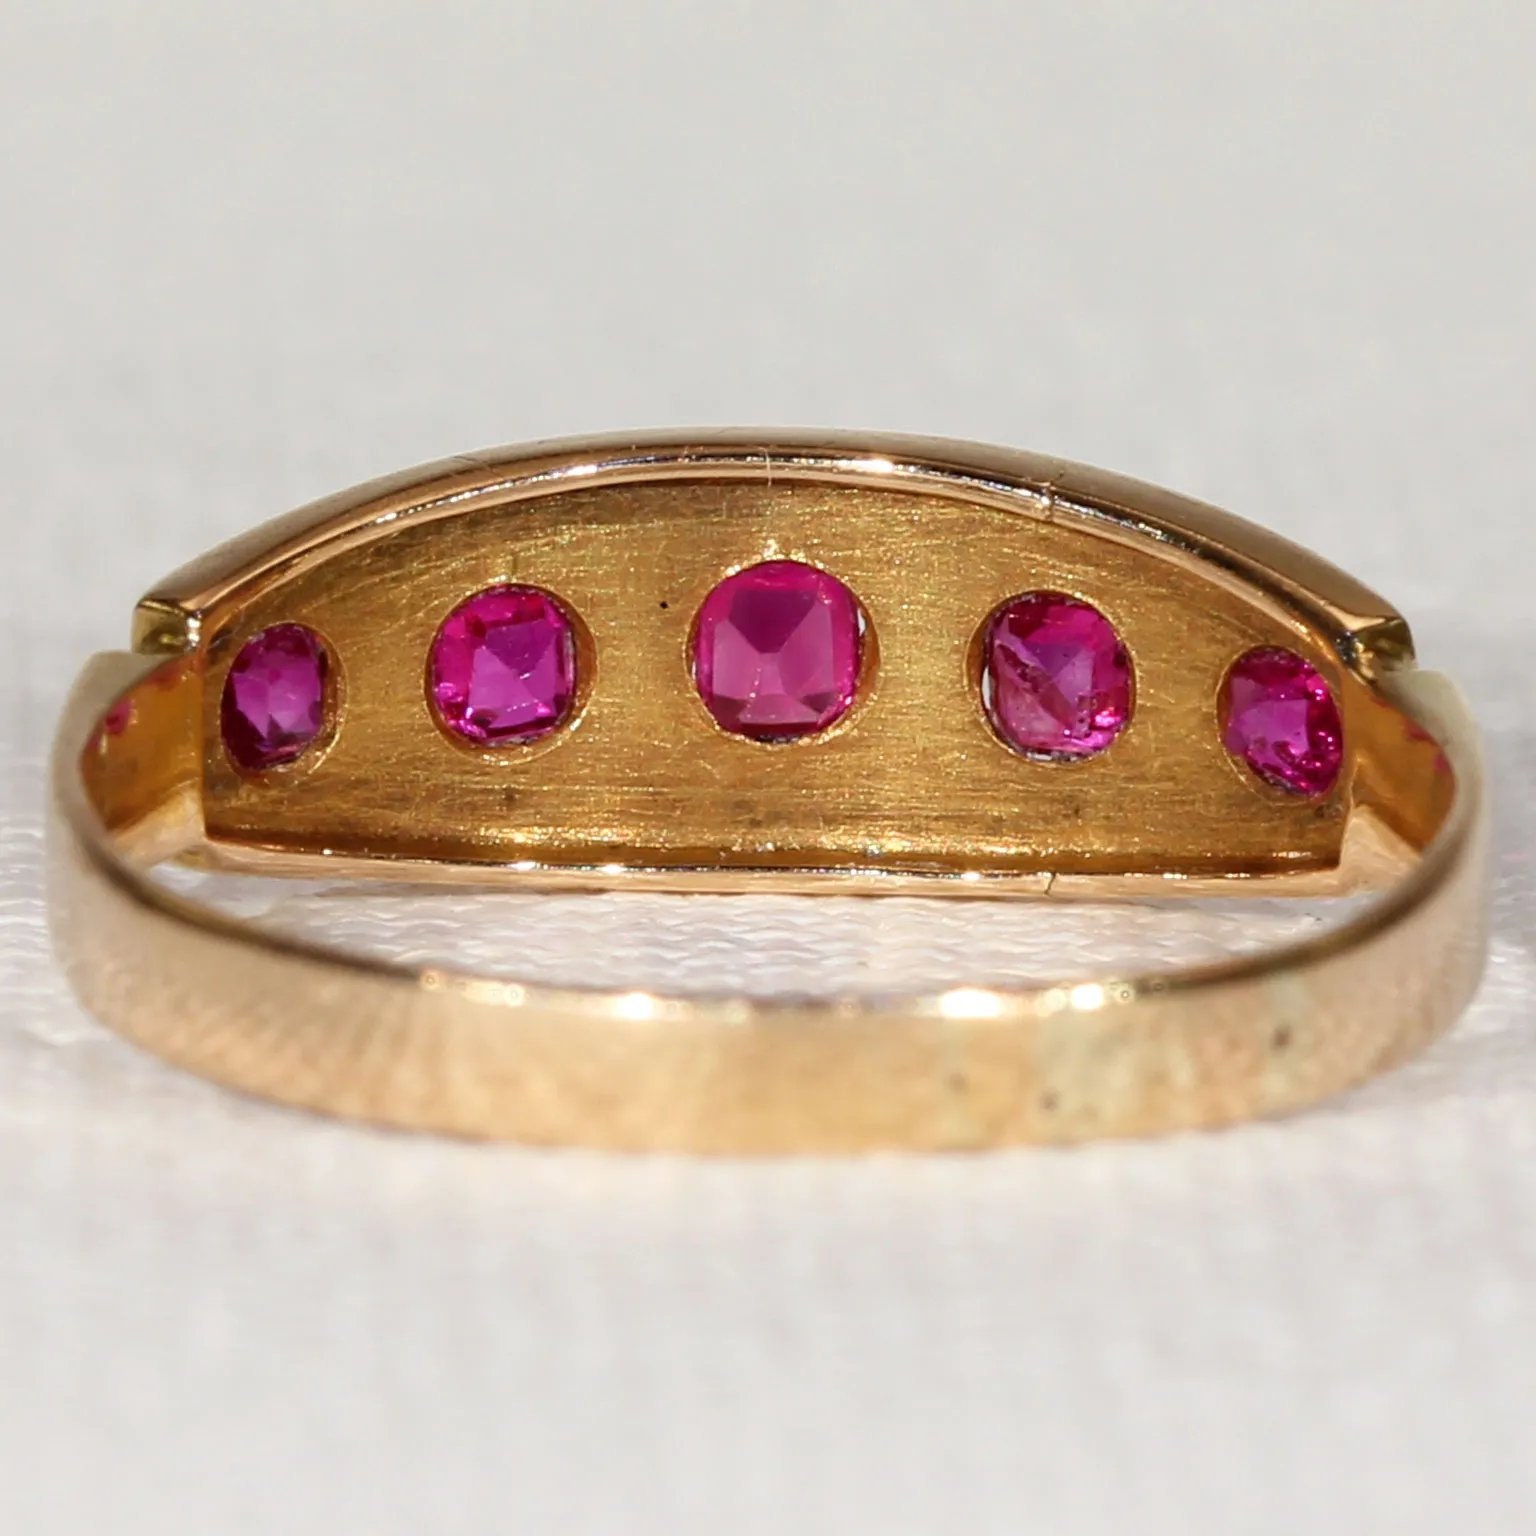 Victorian 5 Stone Ruby Ring in 15k Gold Size 7.75 Birmingham | Etsy